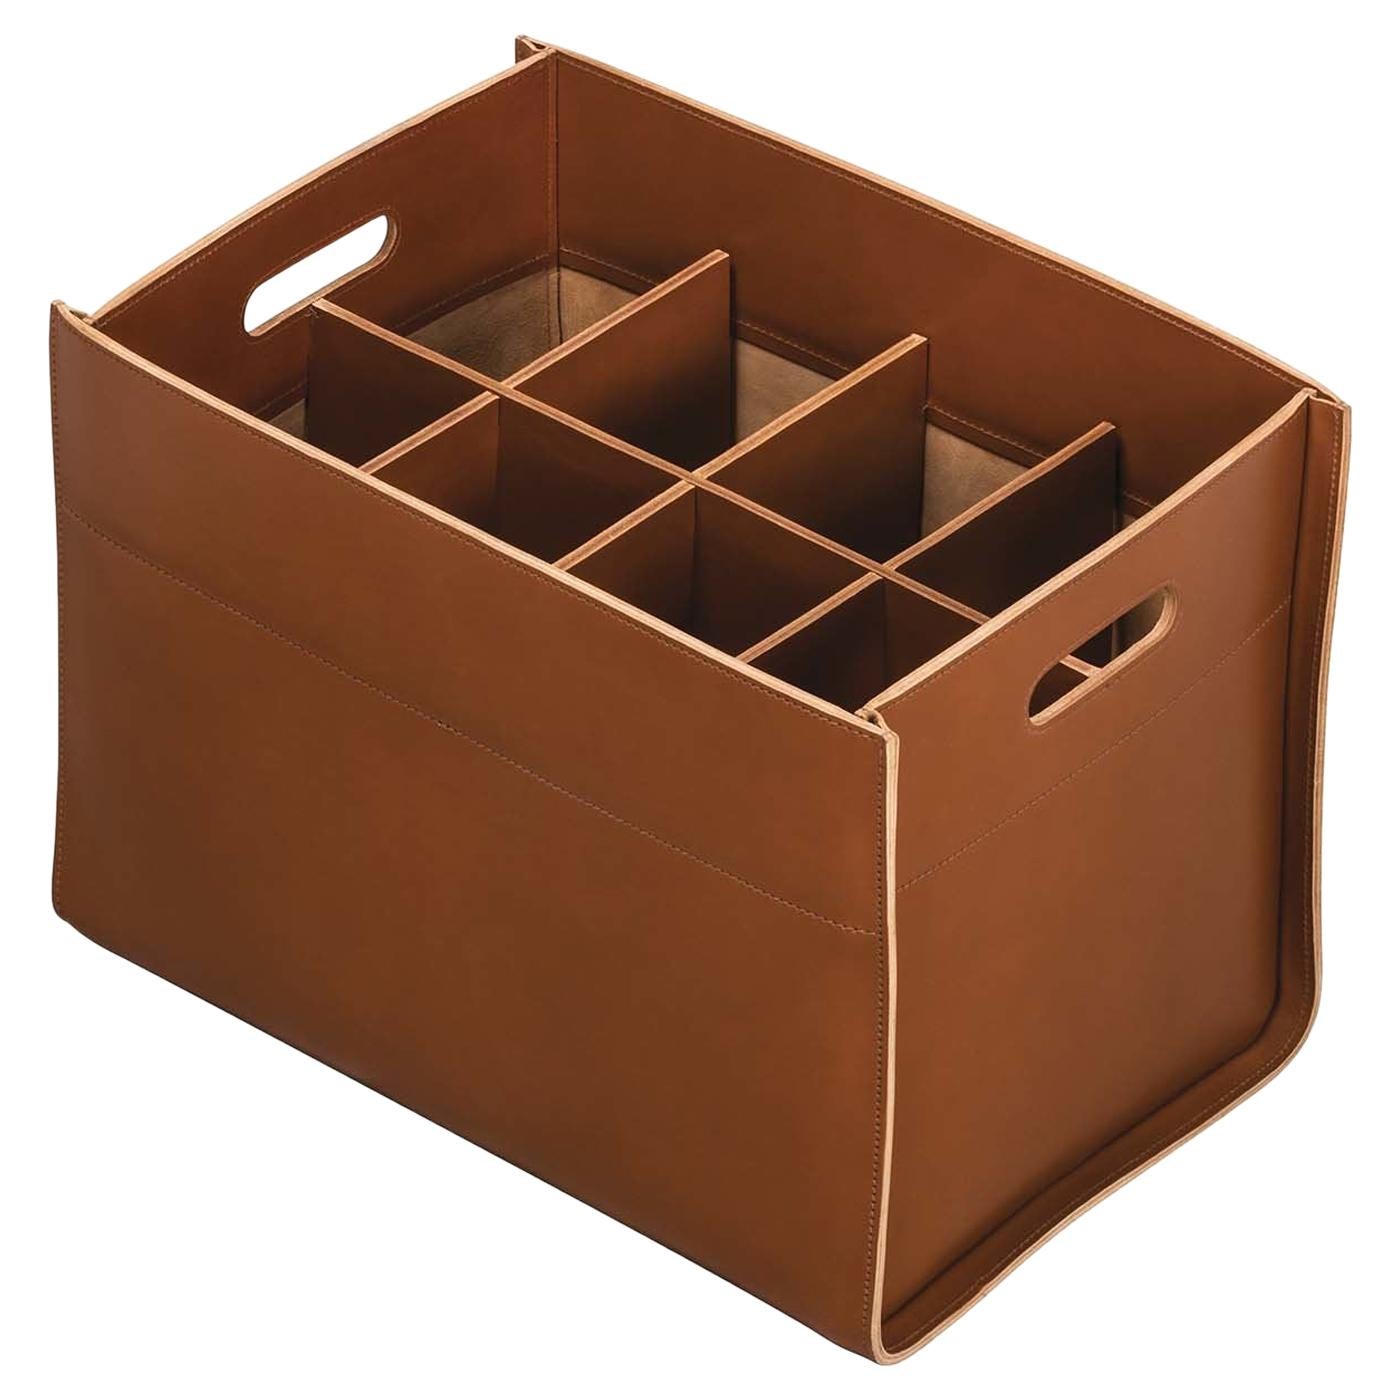 Delta Rectangular 6-Compartment Basket in Caramel Leather